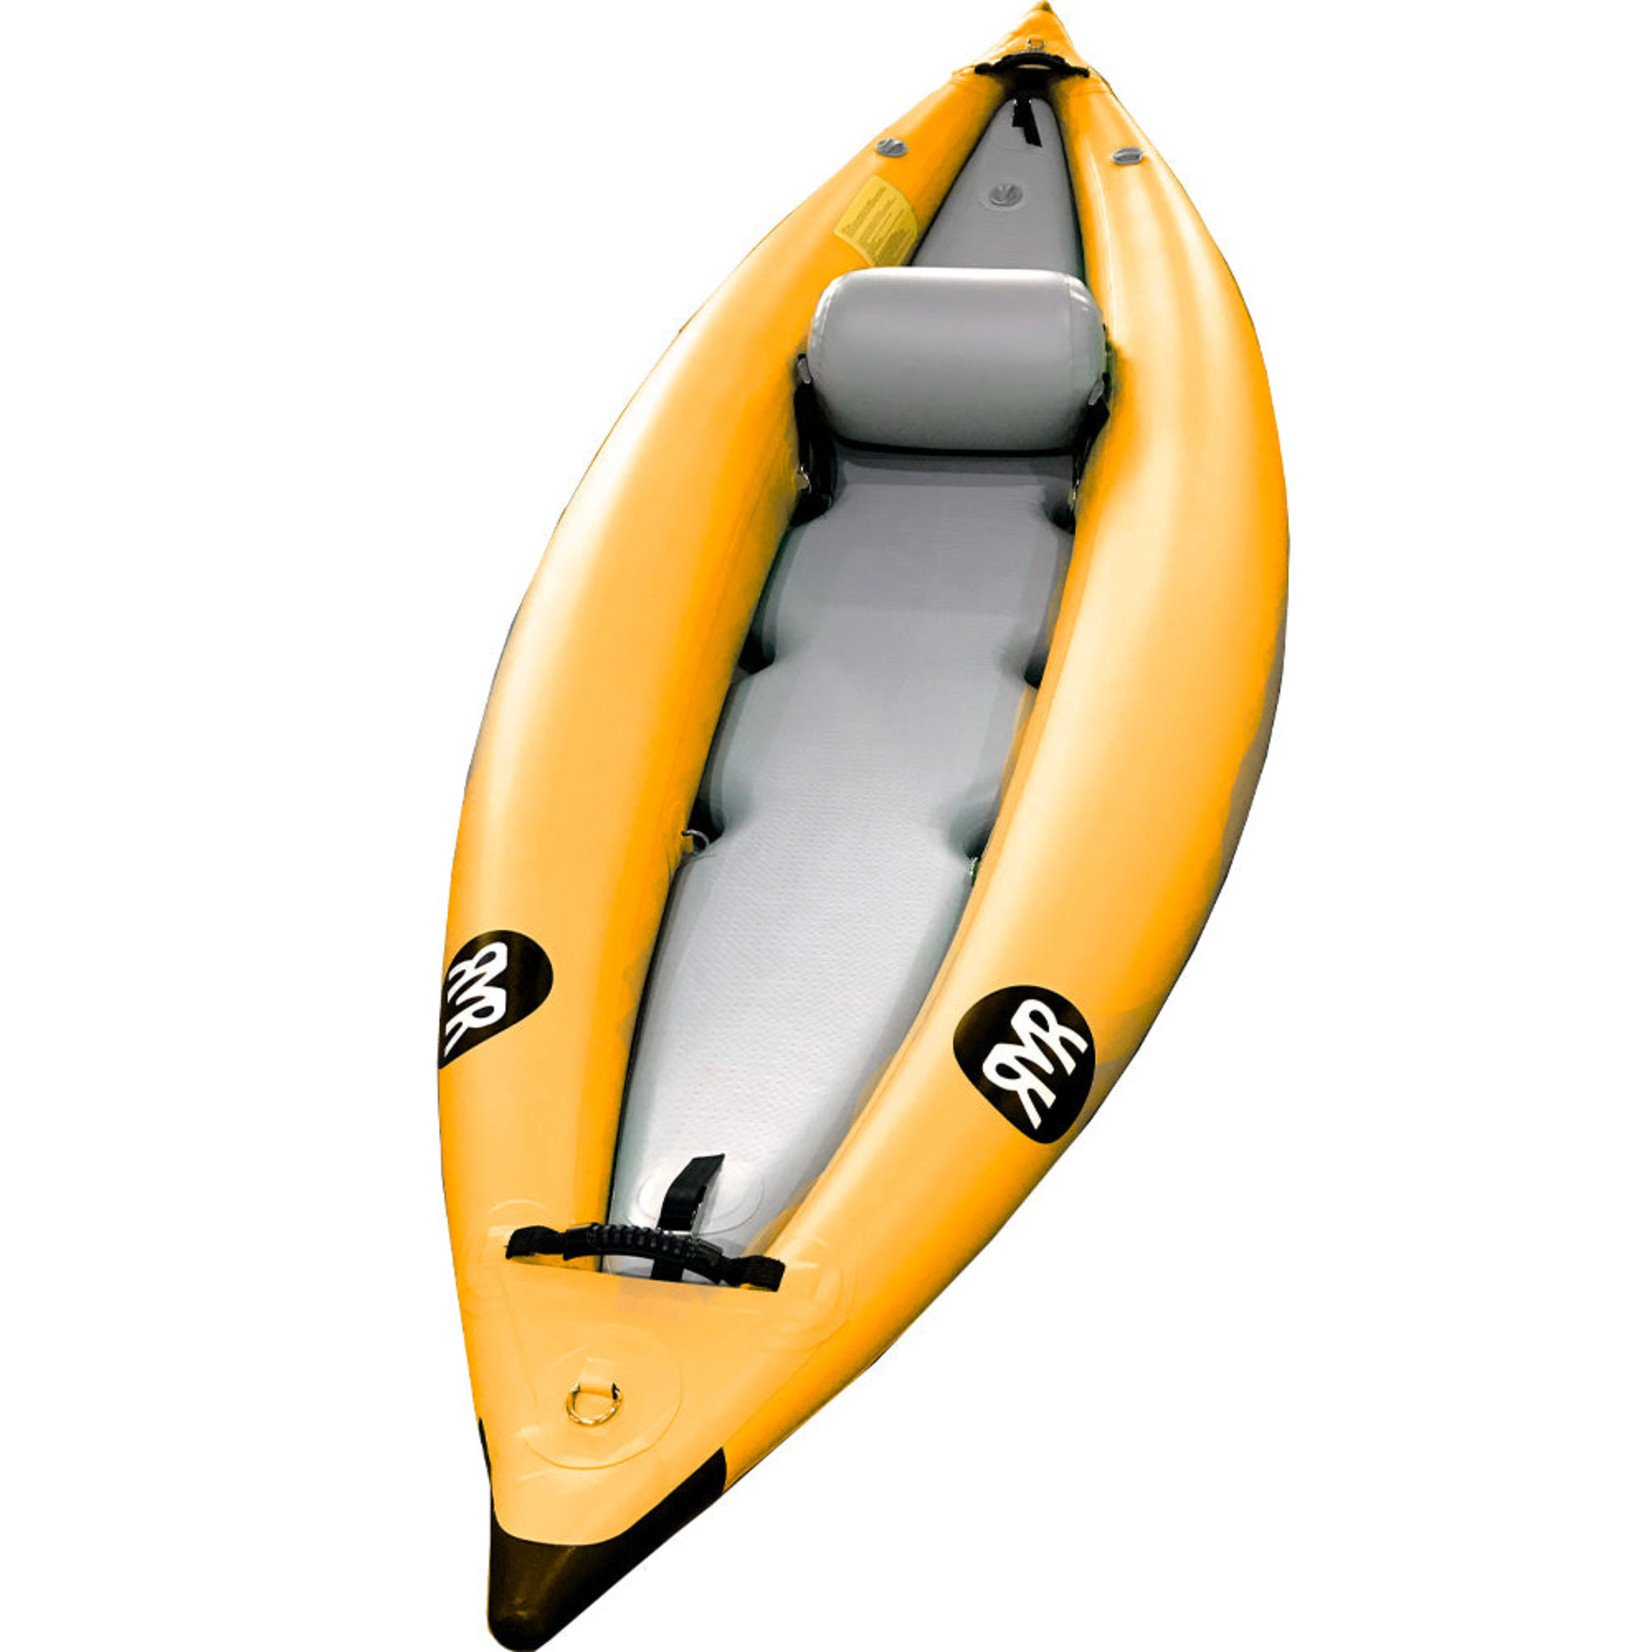 Rocky Mountain Rafts Rocky Mountain Taylor IK-126 Single Inflatable Kayak